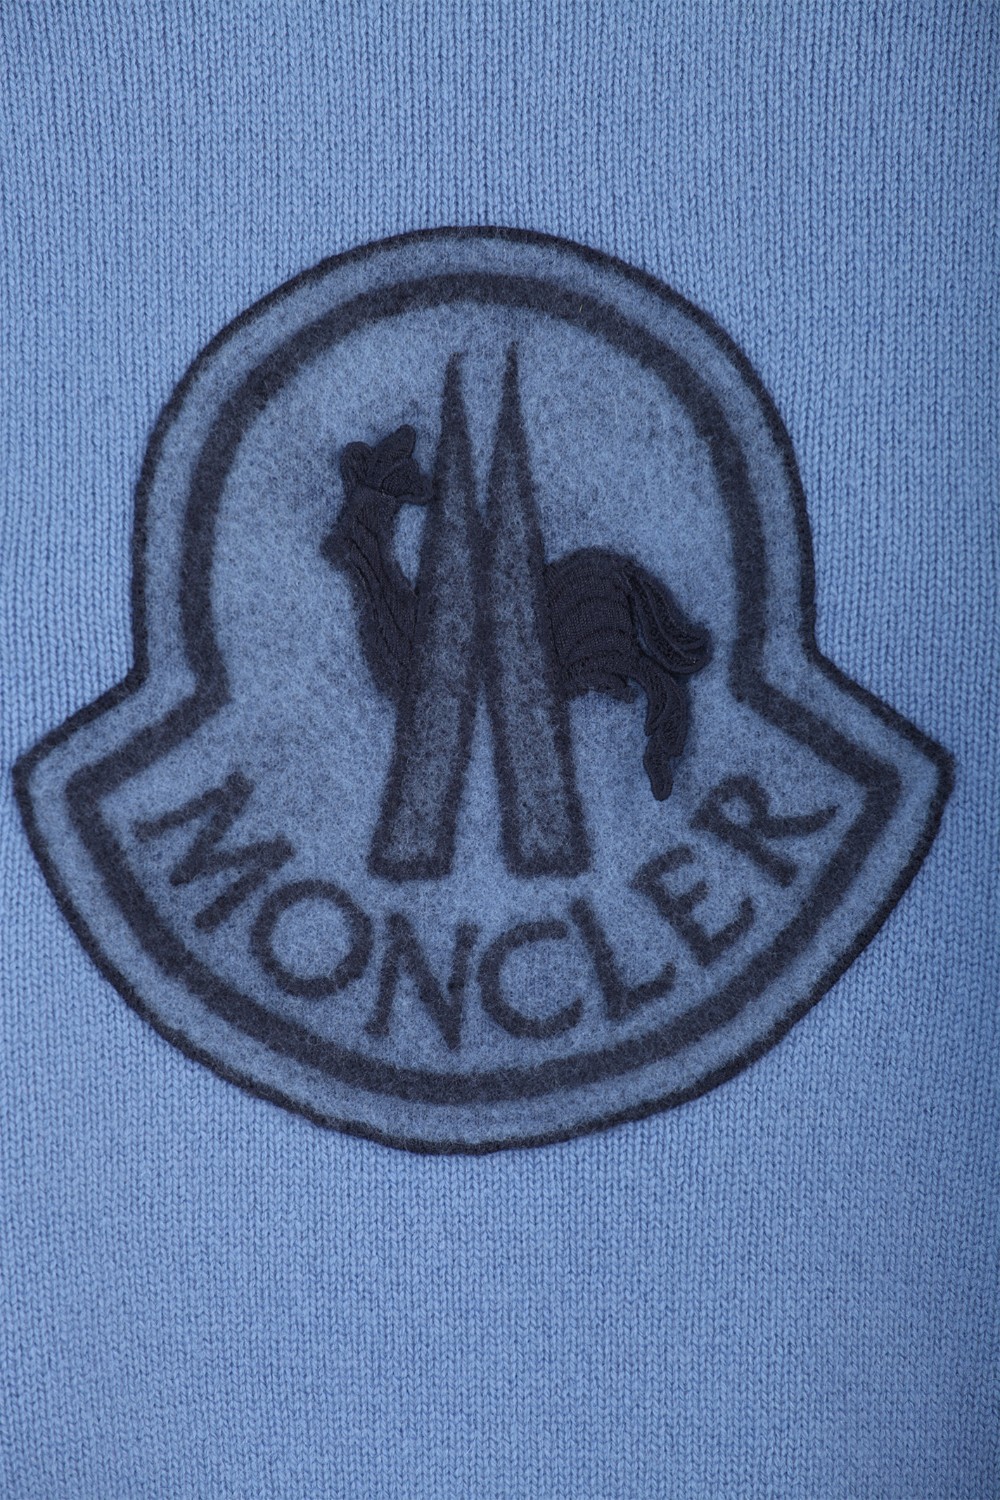 shop MONCLER Saldi Pull: Moncler pullover in lana e cachemire con Logo.
Girocollo.
Maniche lunghe.
Logo Moncler ricamato sulla parte centrale anteriore.
Regular fit.
Composizione: 70% lana 30% cachemire.. 90559 52 A9235 0-785 number 7209497